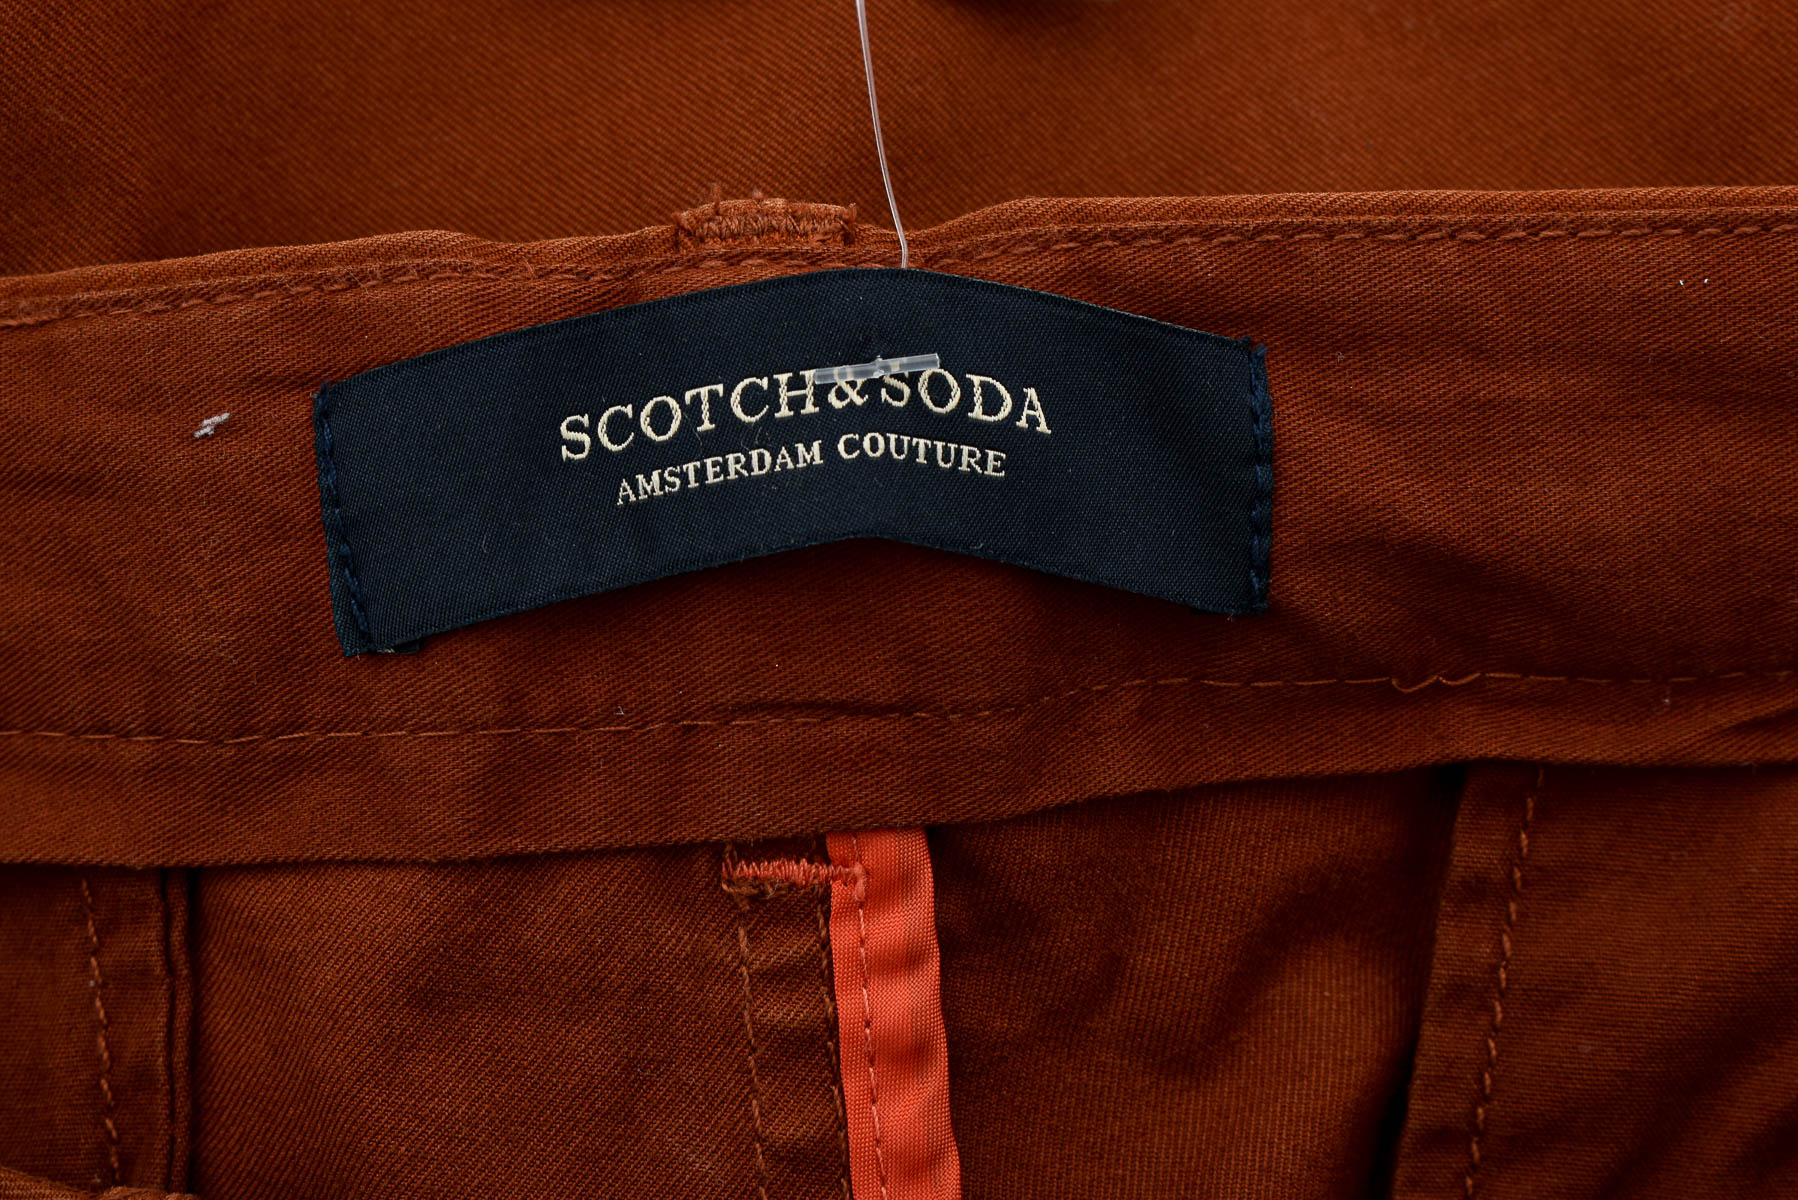 Men's trousers - SCOTCH & SODA - 2